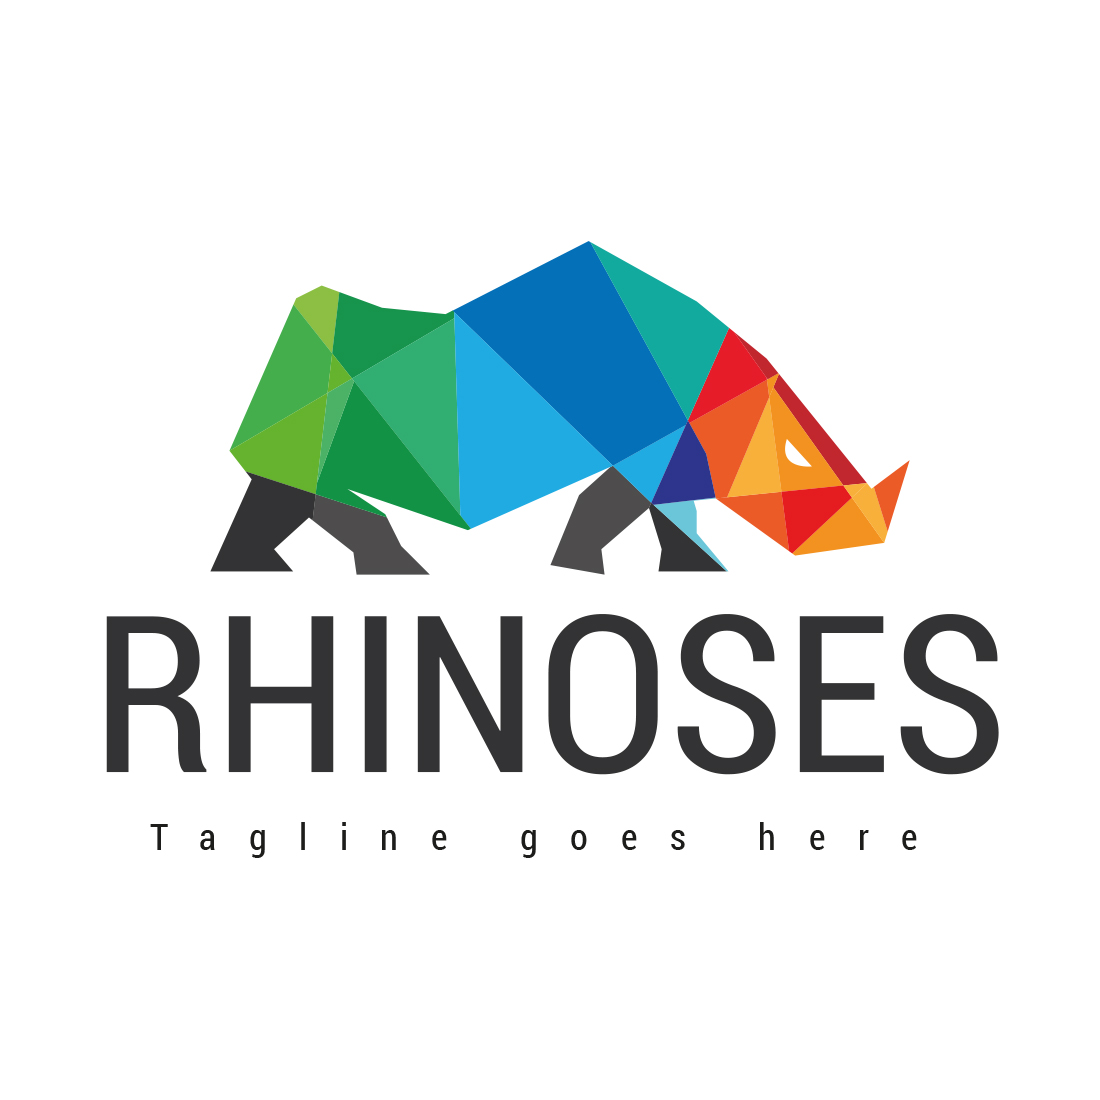 Rhinosorus geometrical logo design cover image.